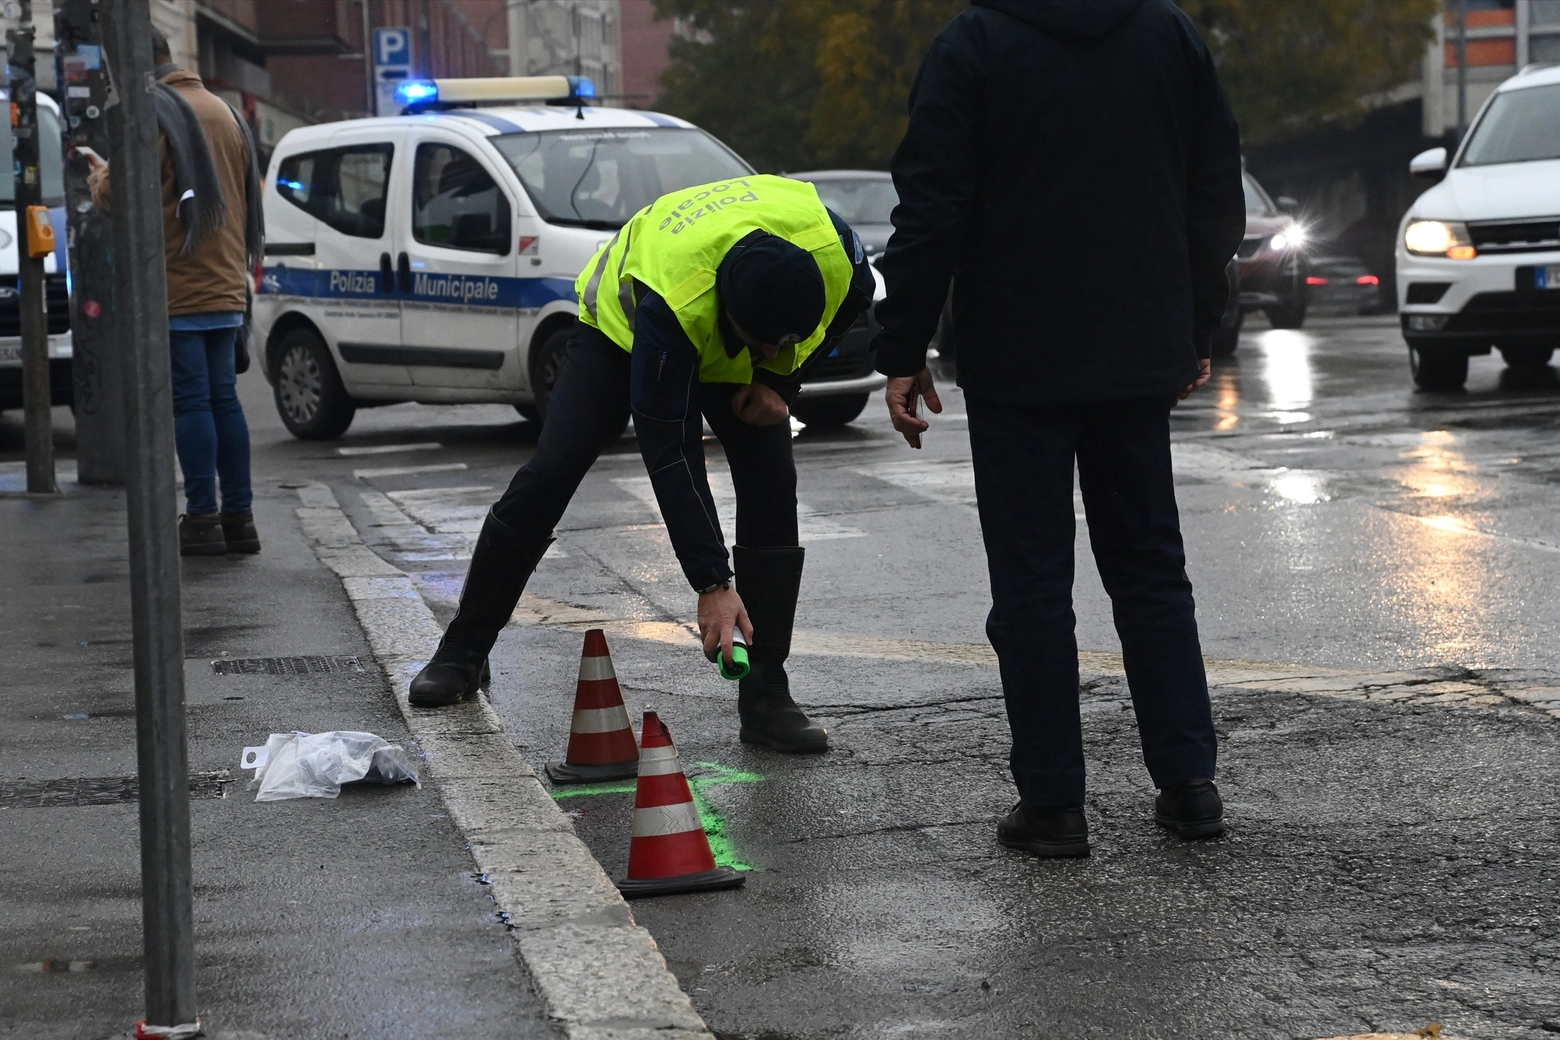 Incidente o caduta accidentale? Grave una donna soccorsa in viale Pietramellara (Fotoschicchi)